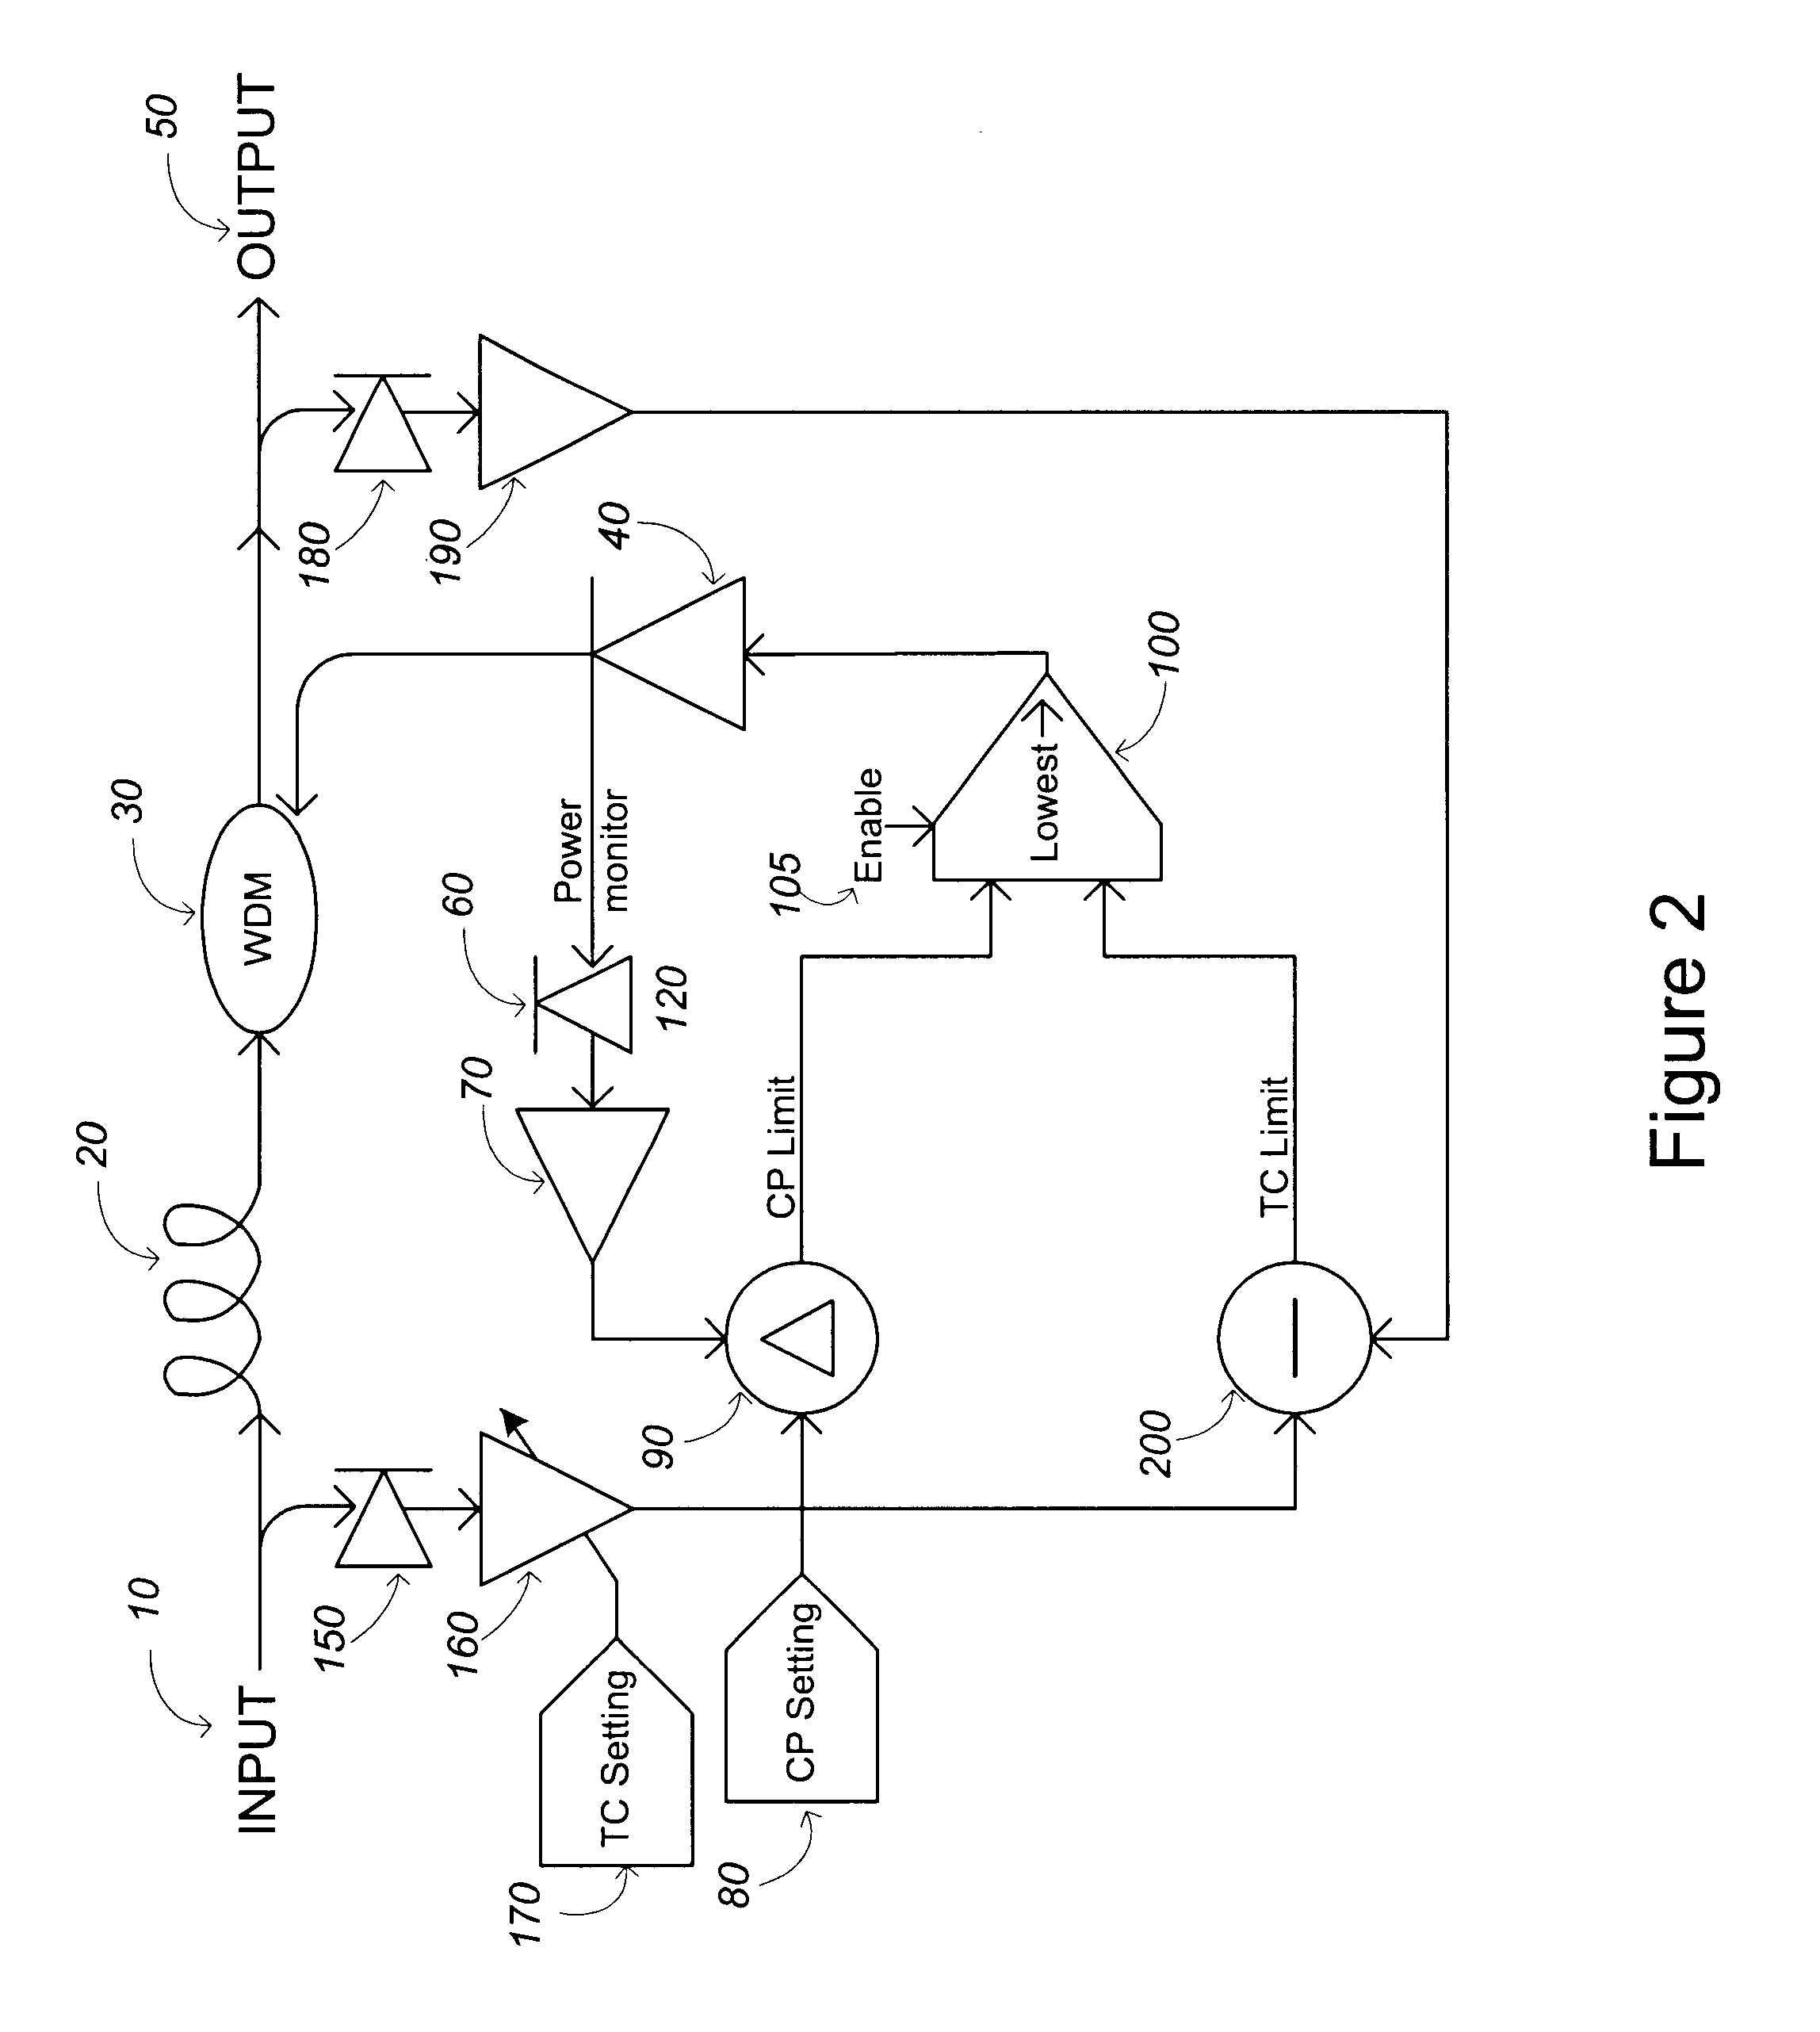 Optical amplifier transient control apparatus